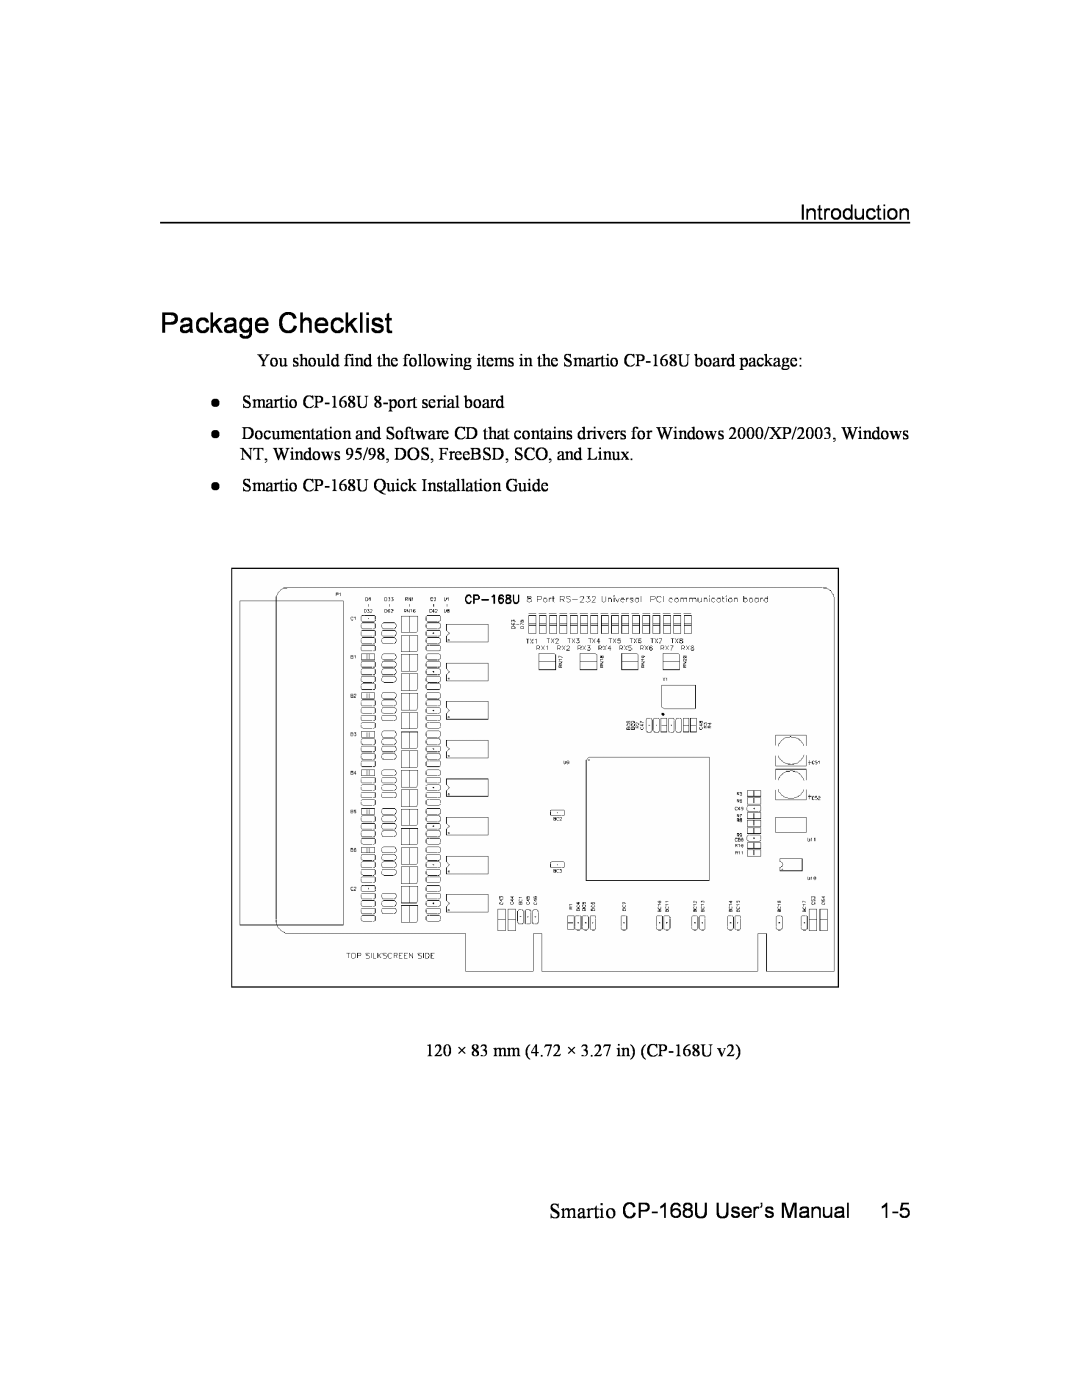 Moxa Technologies Package Checklist, Introduction, Smartio CP-168U User’s Manual, Smartio CP-168U 8-port serial board 